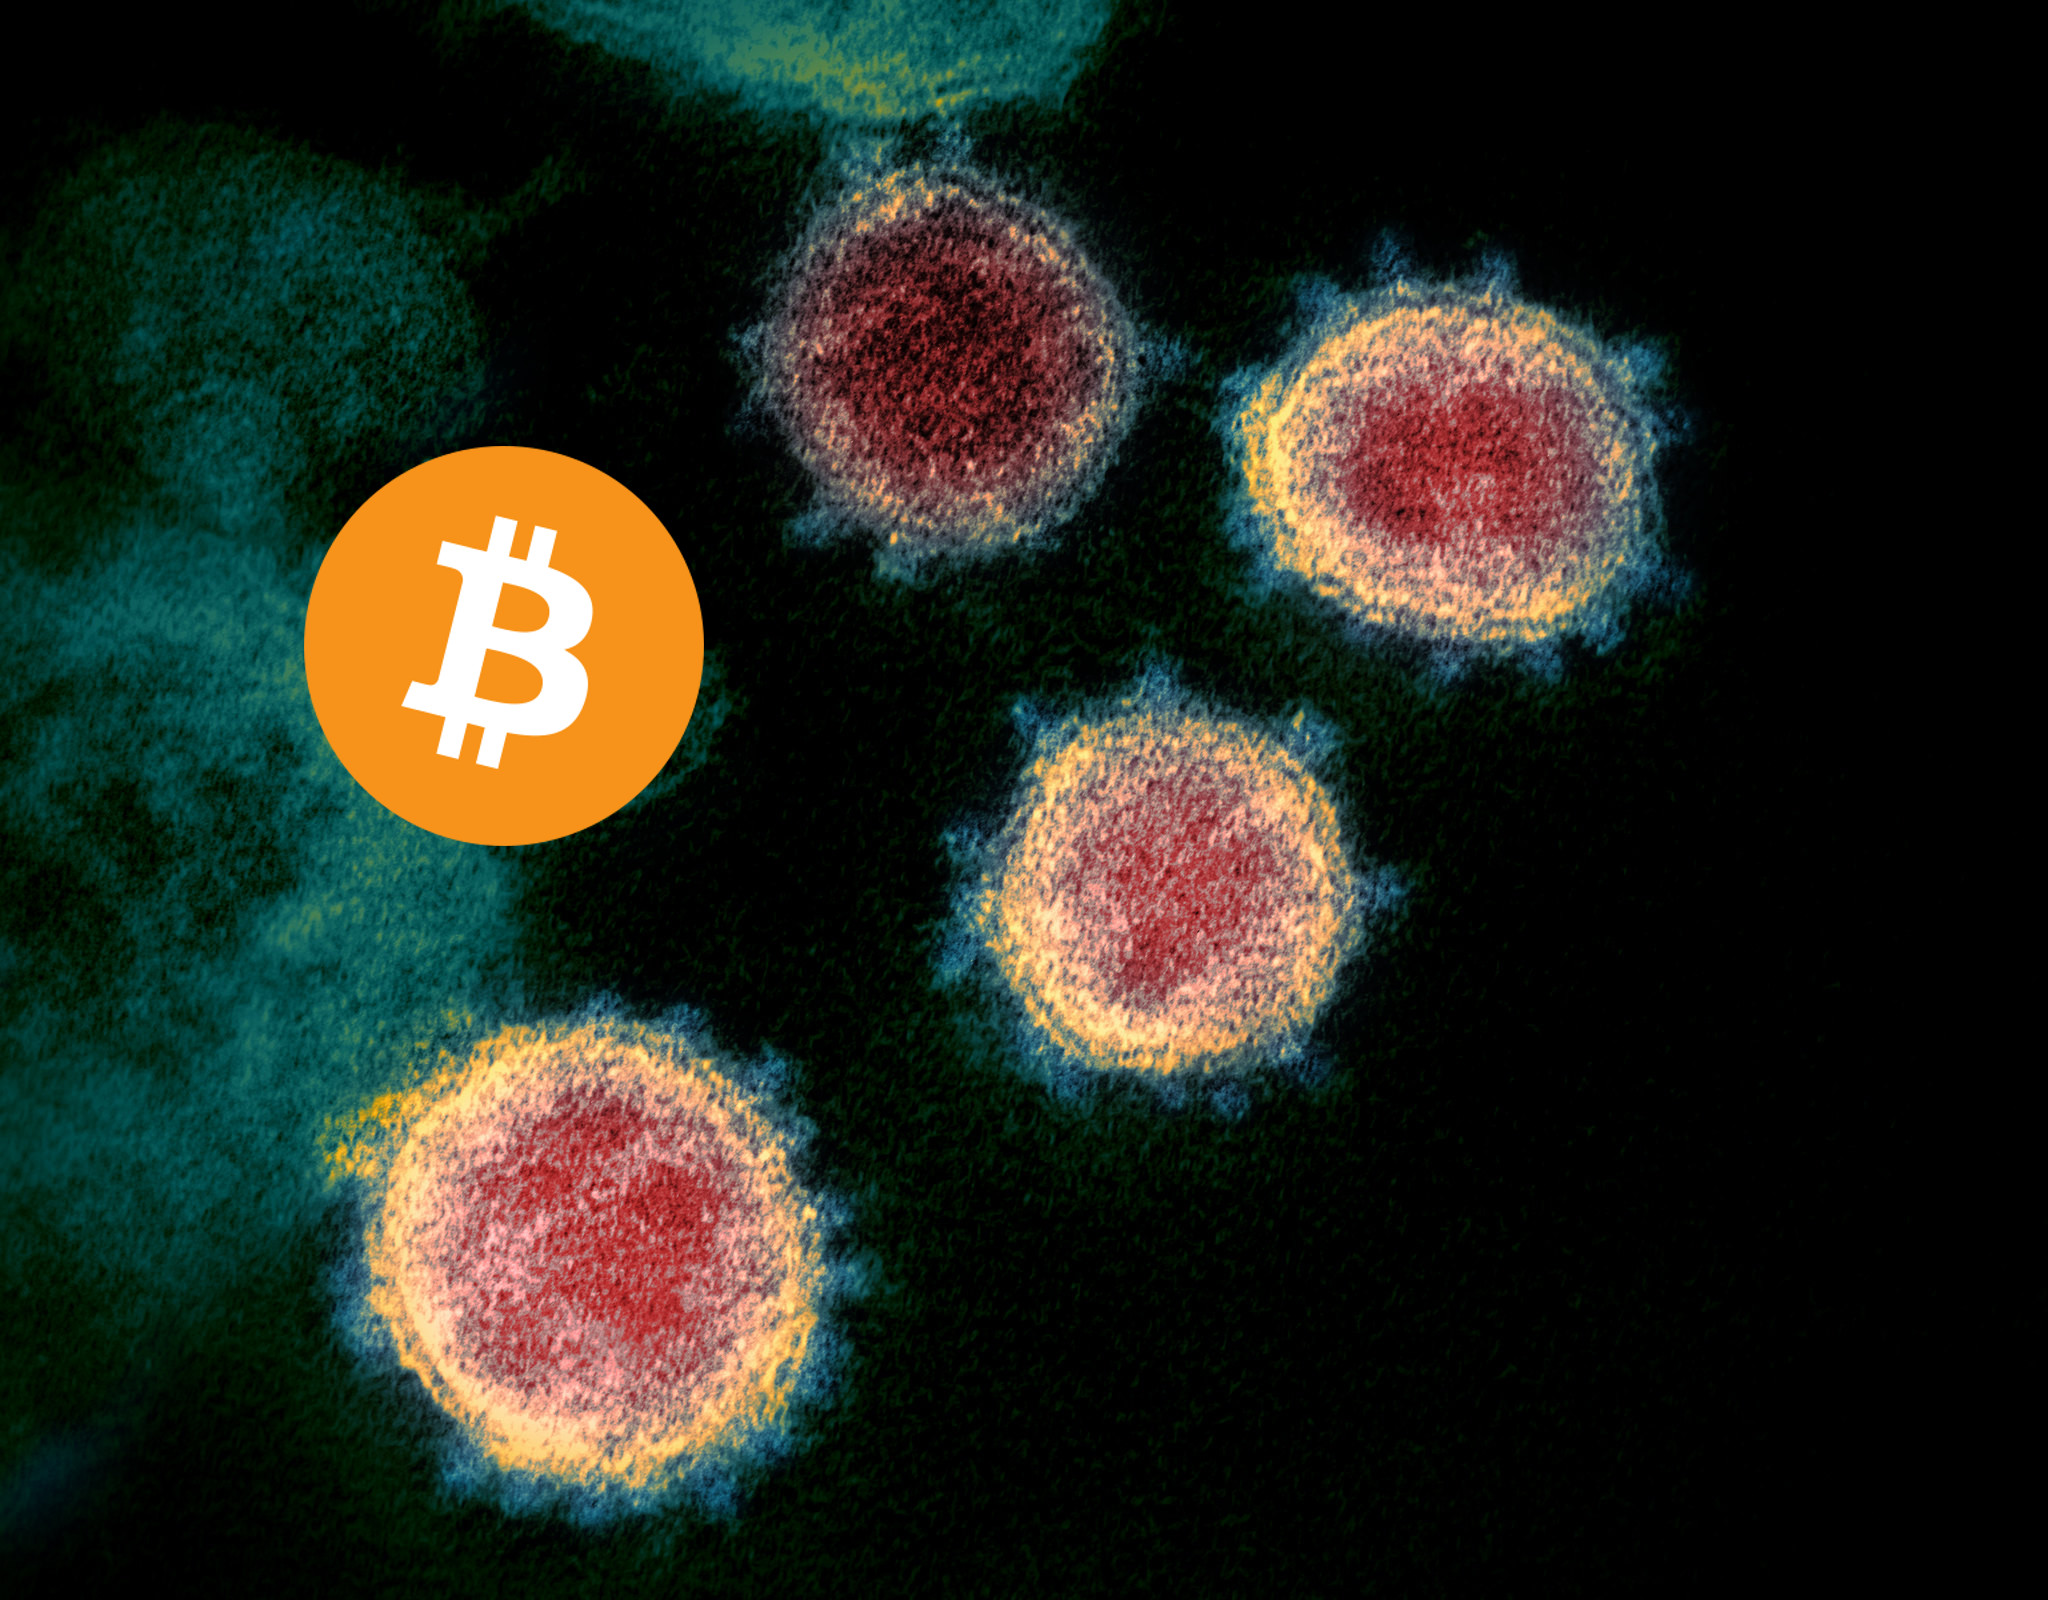 EILMELDUNG: Bitcoin besiegt Corona. Impfrezept verschlüsselt in Blockchain entdeckt!